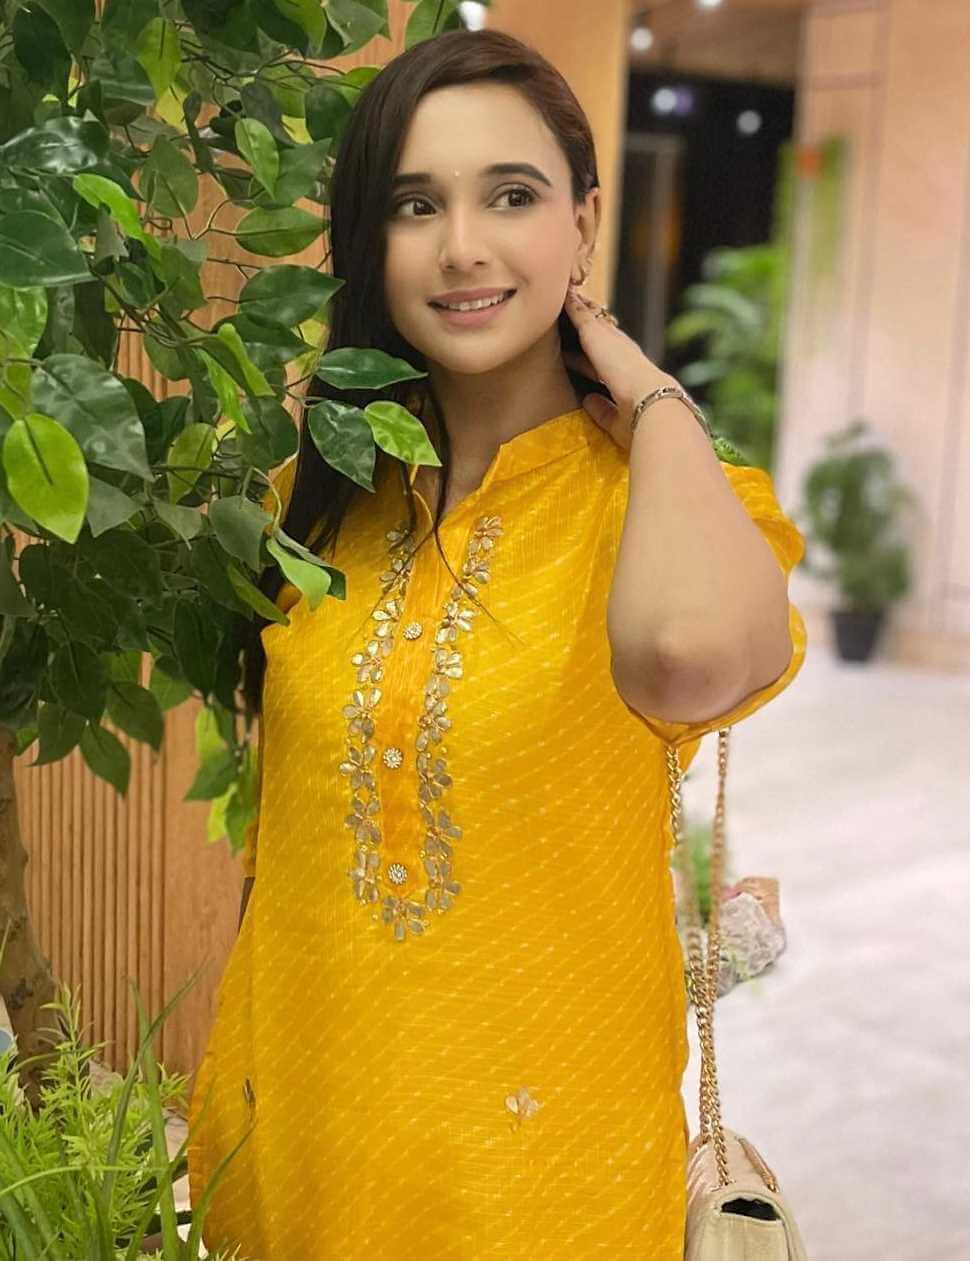 Sabila Nur Yellow Dress Picture